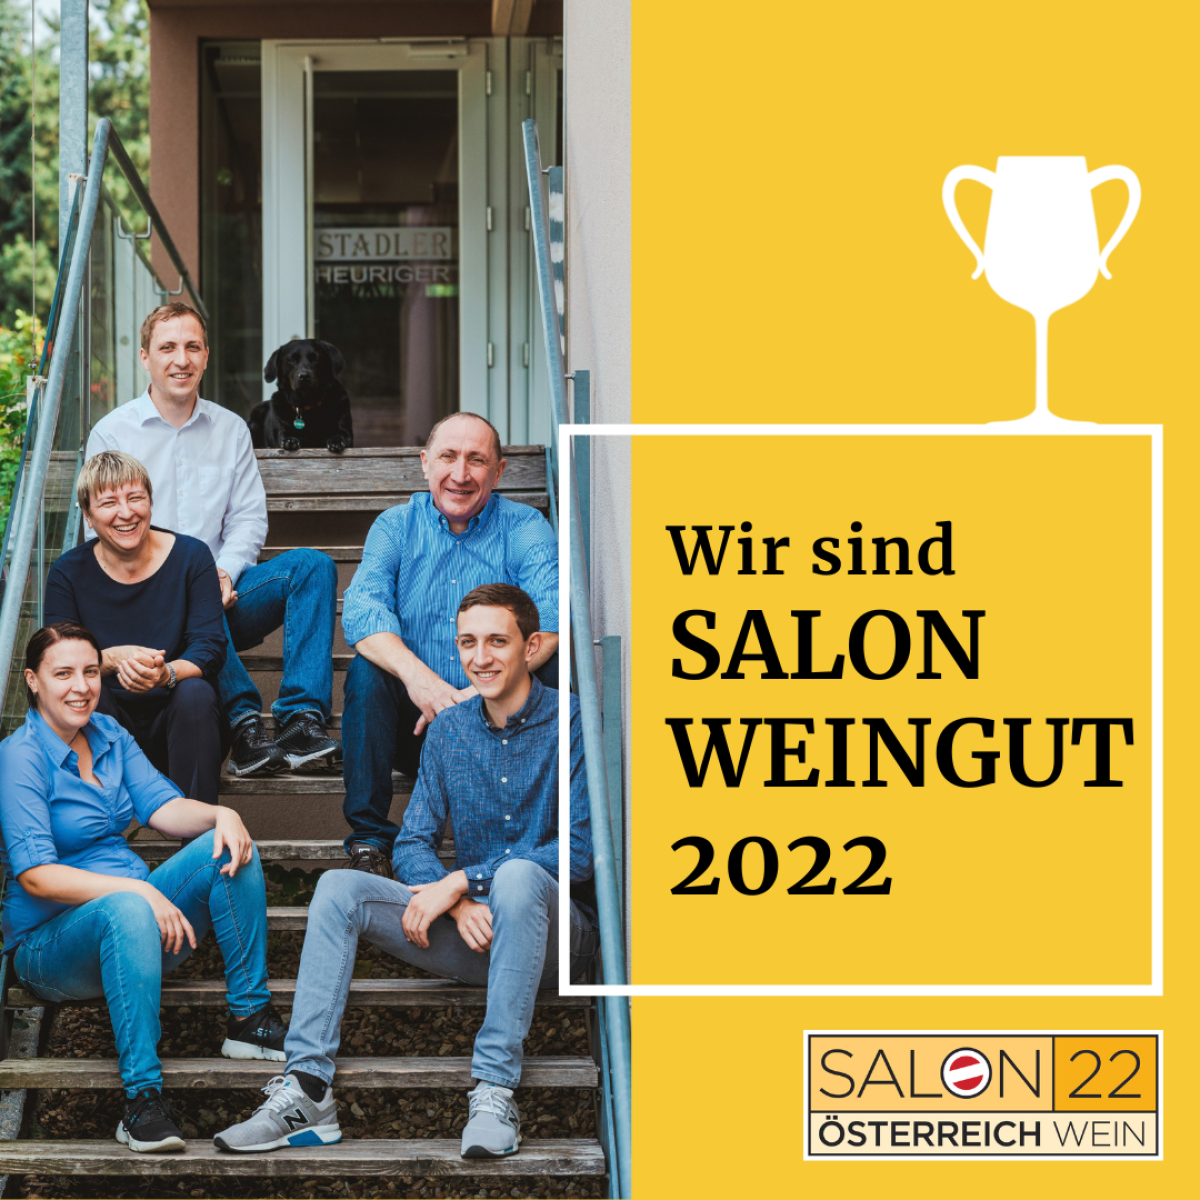 Weingut Stadler - SALON 2022